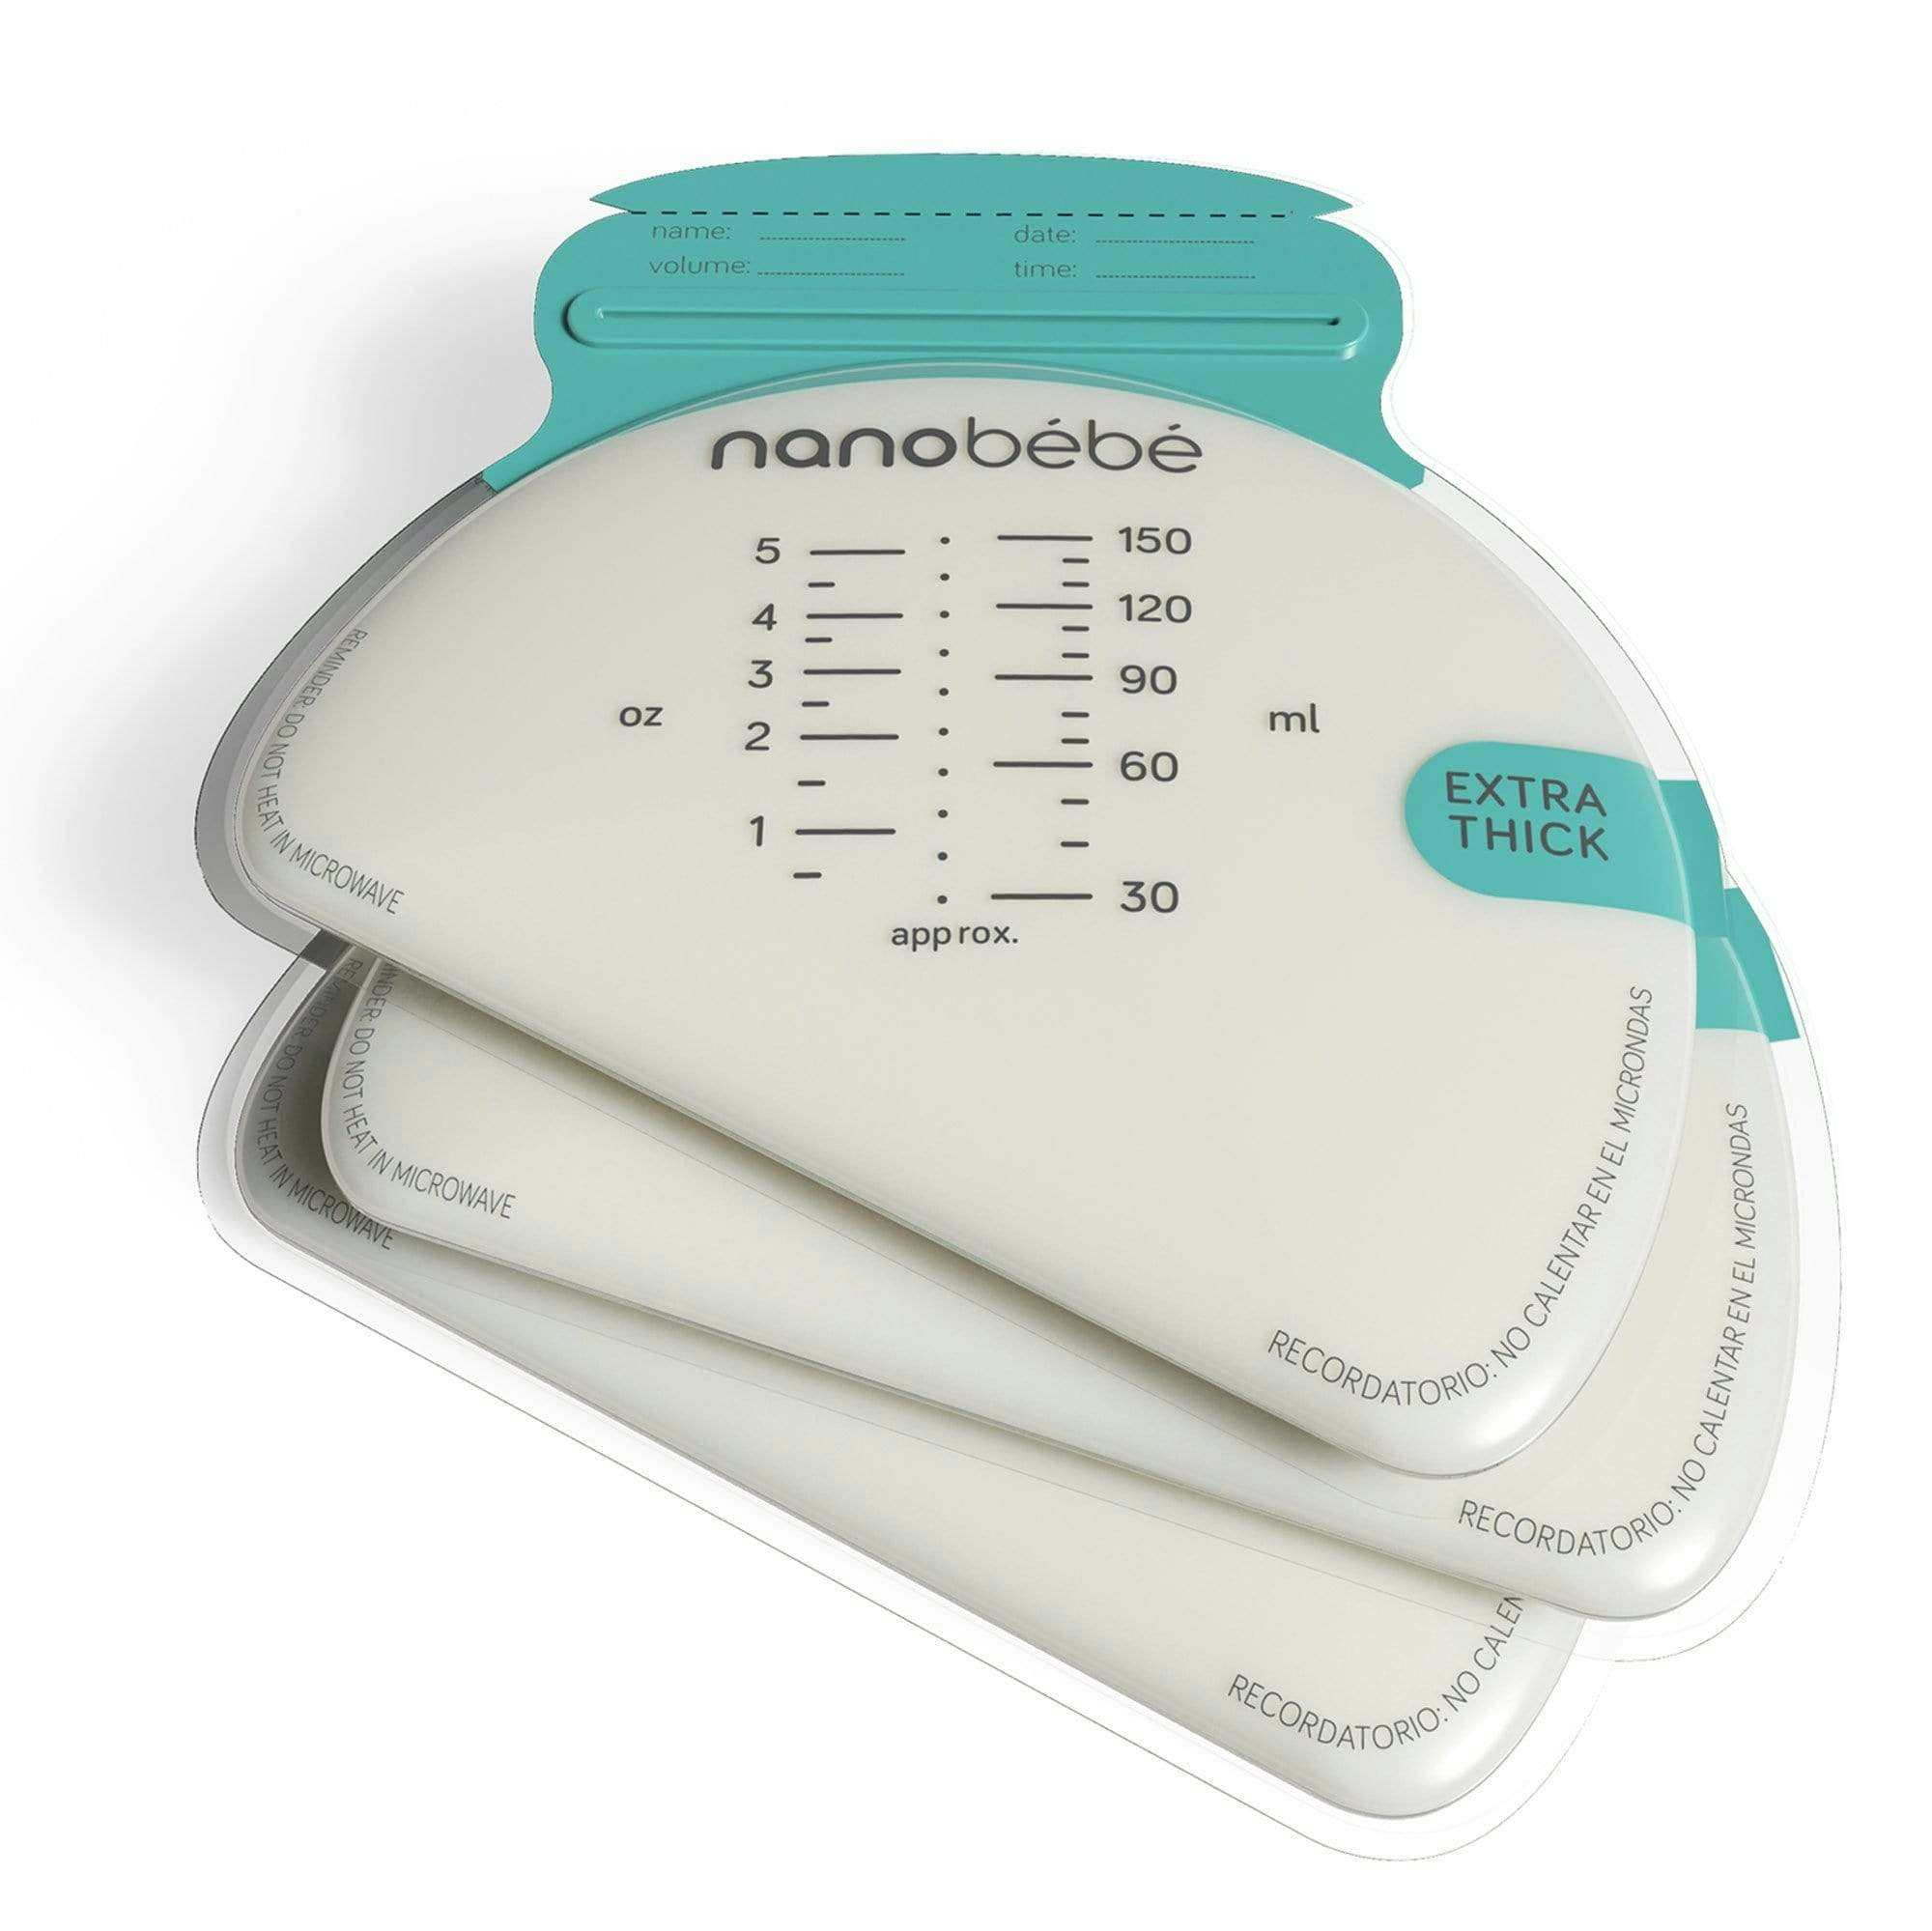 Nanobebe Disposable Nursing Pads Multipack 120 Days